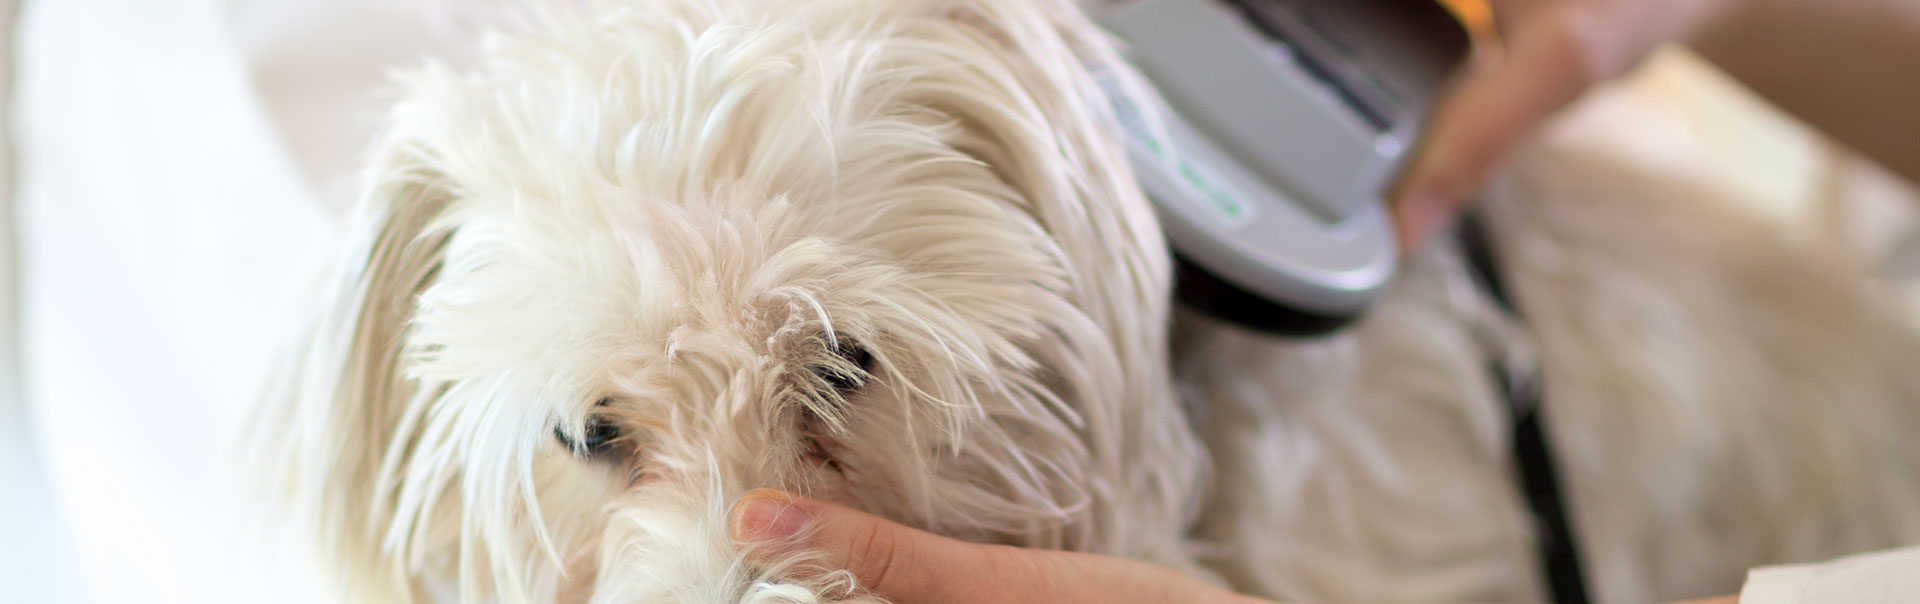 Microchipping a Dog - North Hill Animal Hospital